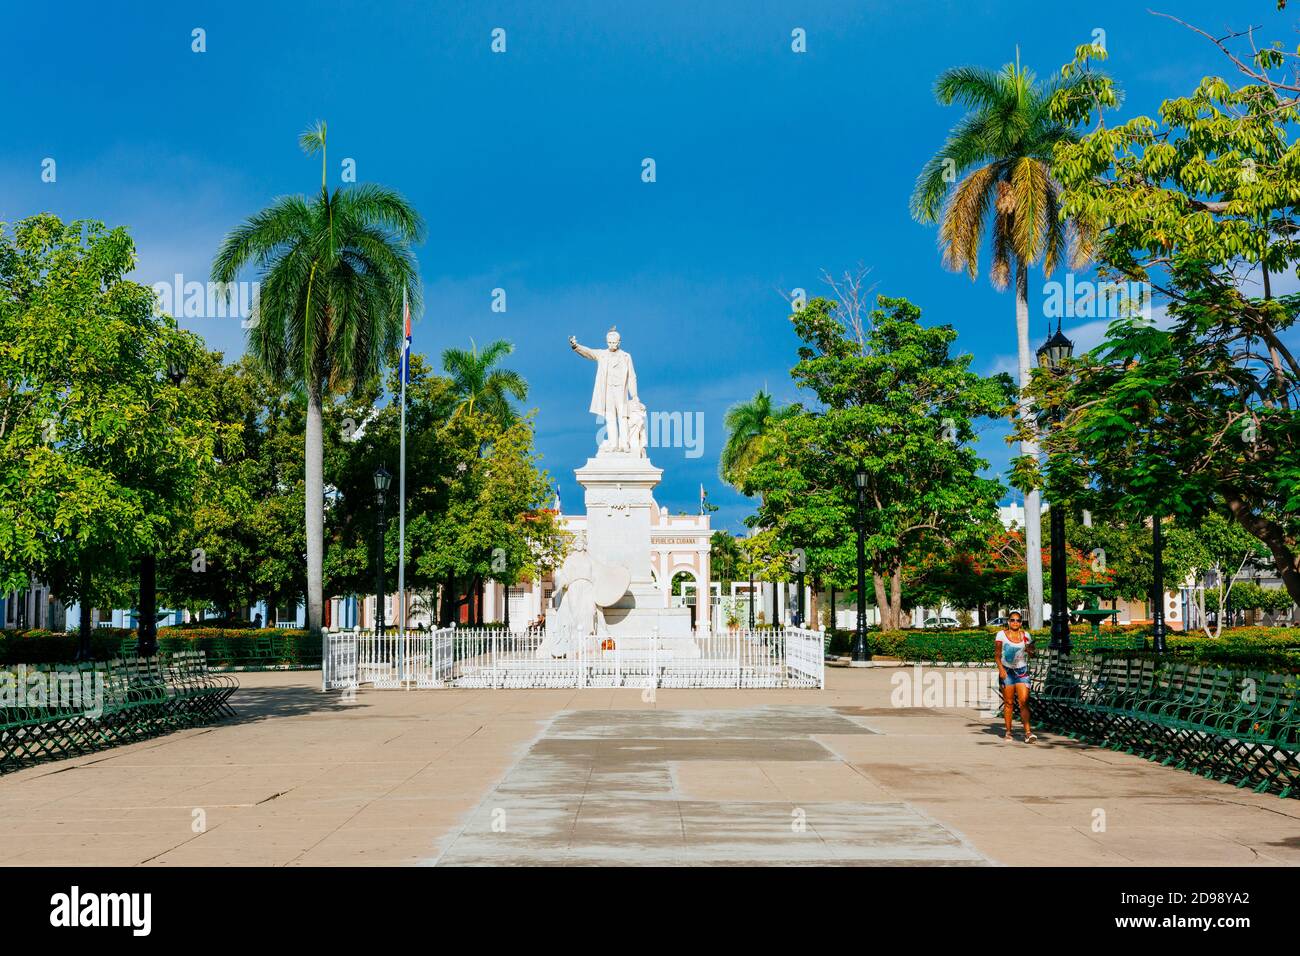 Statua di Jose Martí, rivoluzionario cubano e intellettuale, nel parco di Jose Martí. Cienfuegos, Cuba, America Latina e Caraibi Foto Stock